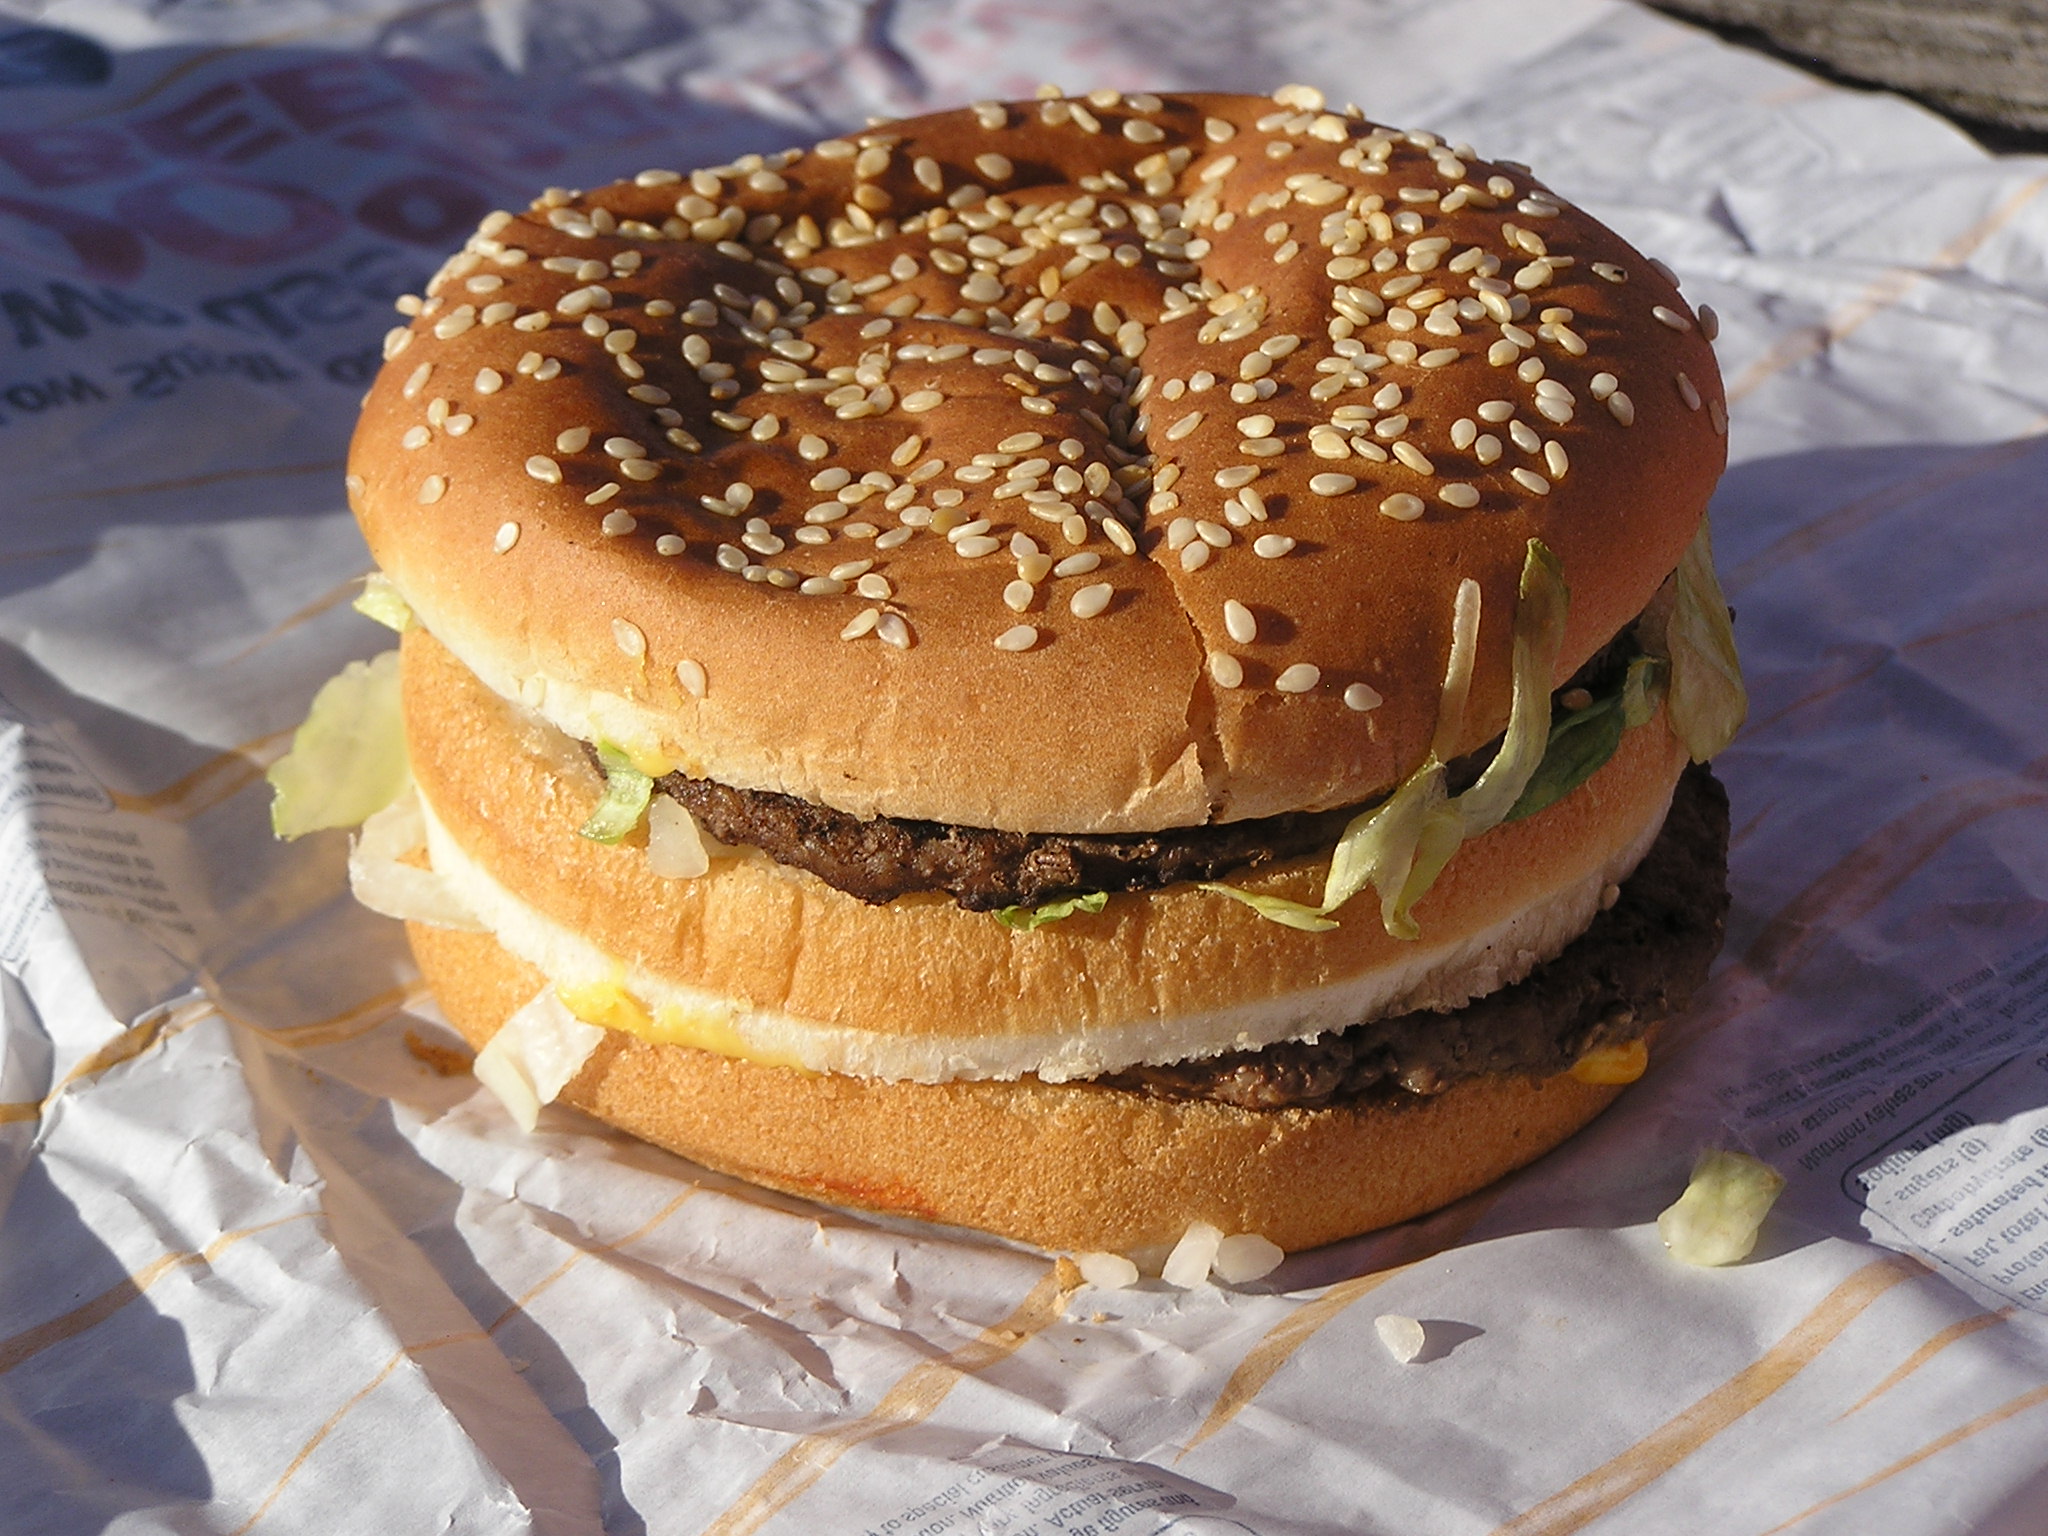 File:Big Mac hamburger Australia.jpg